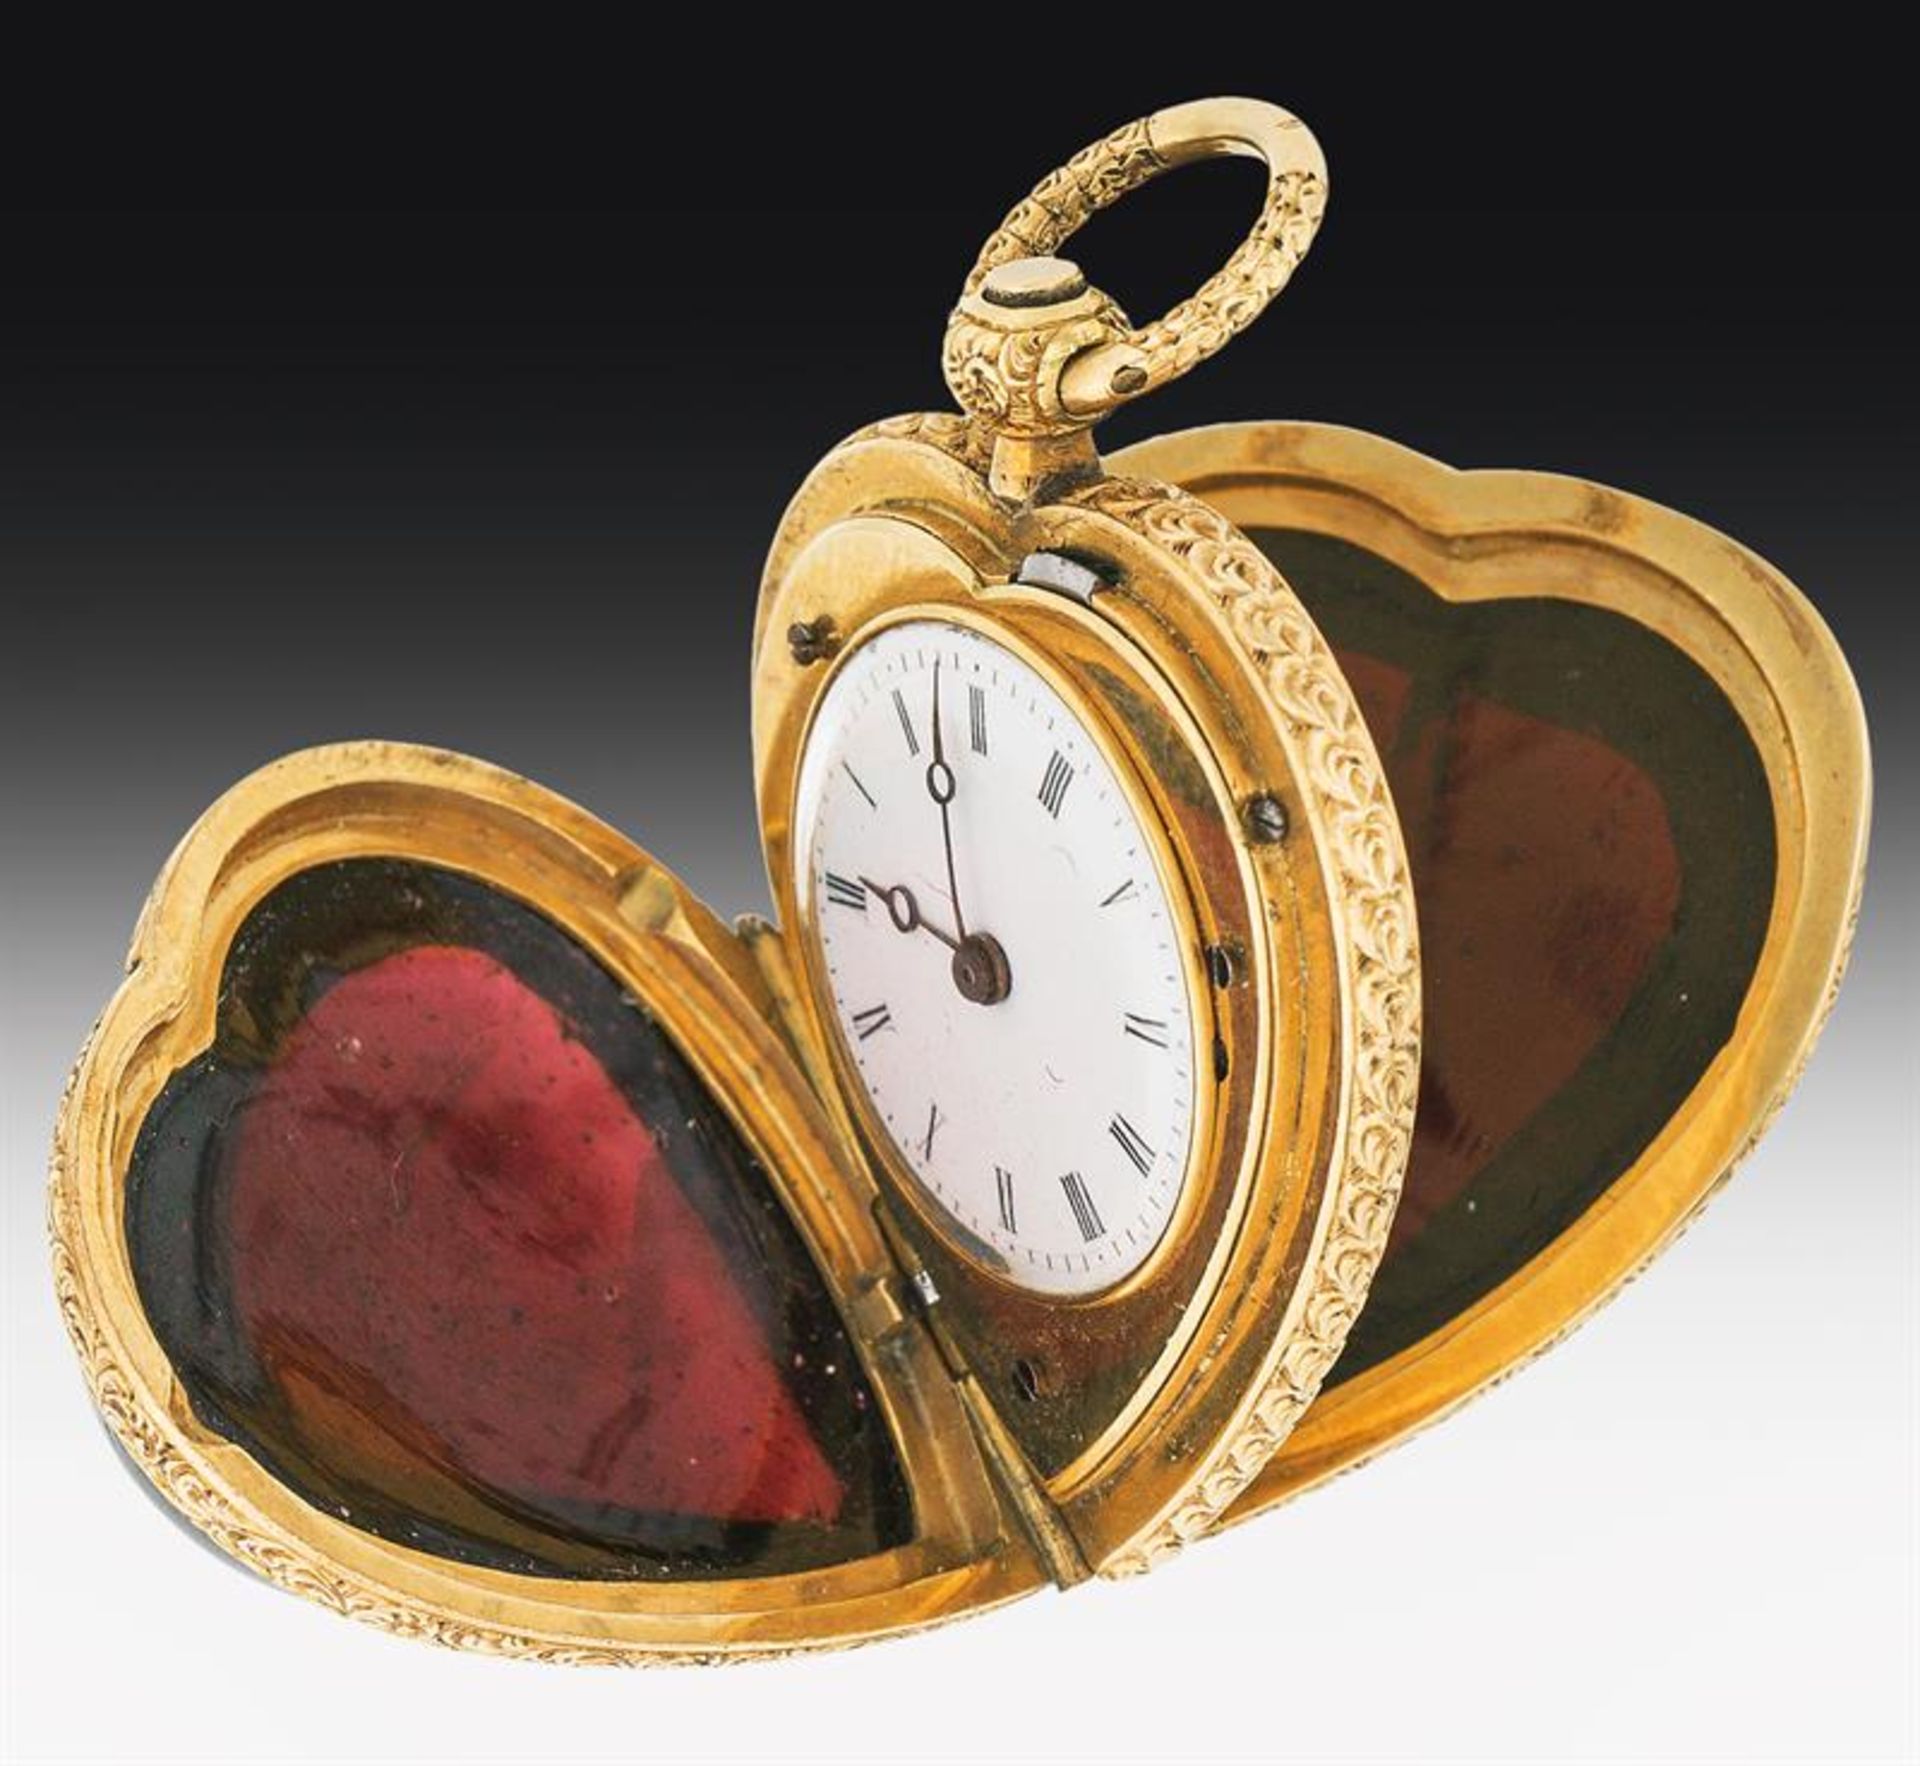 Rare decorative watch, Patek Philippe - Image 3 of 3